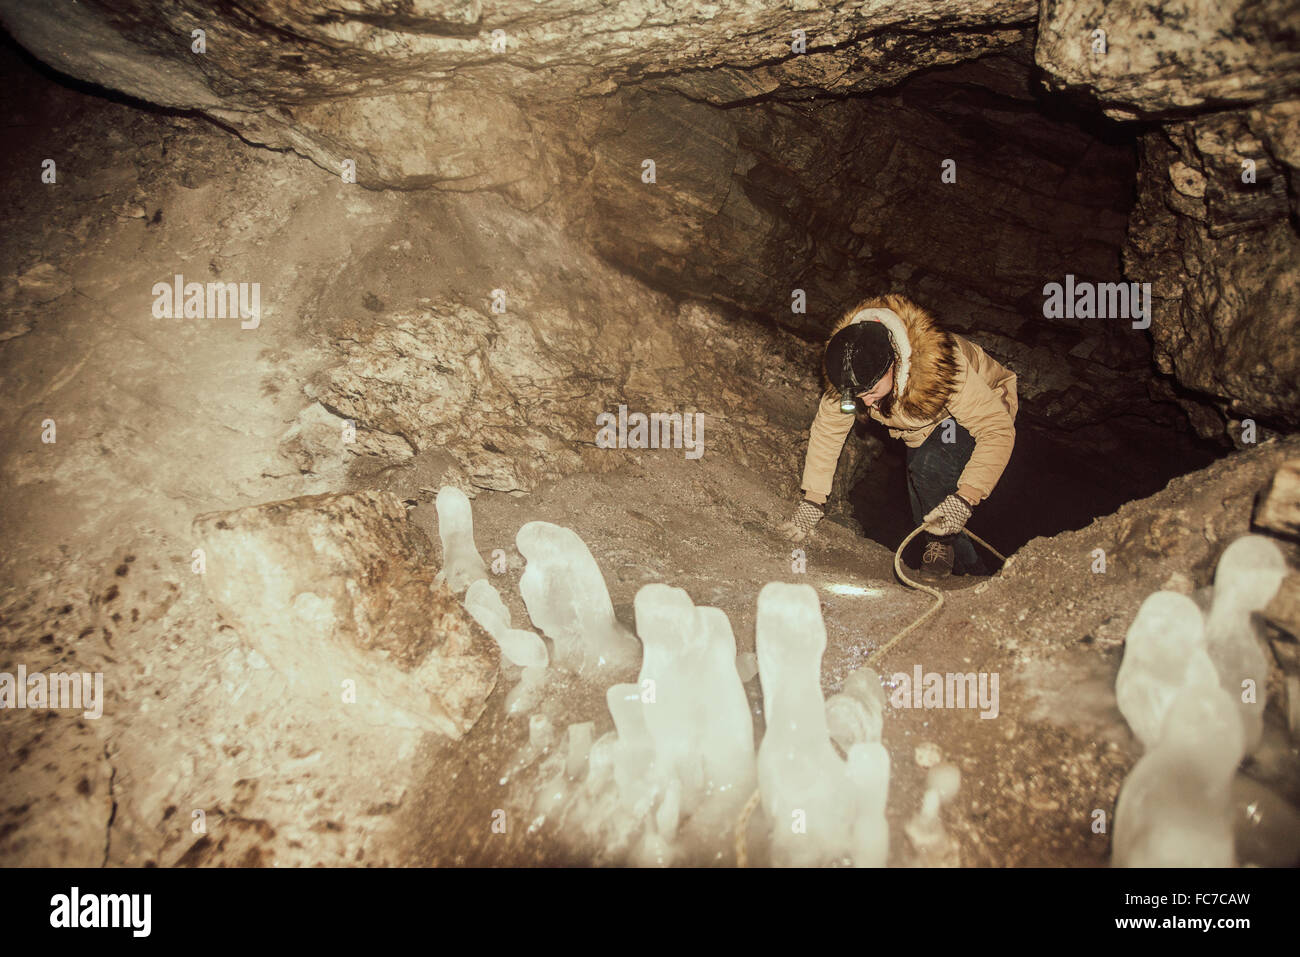 Caucasian hiker climbing in cave Stock Photo